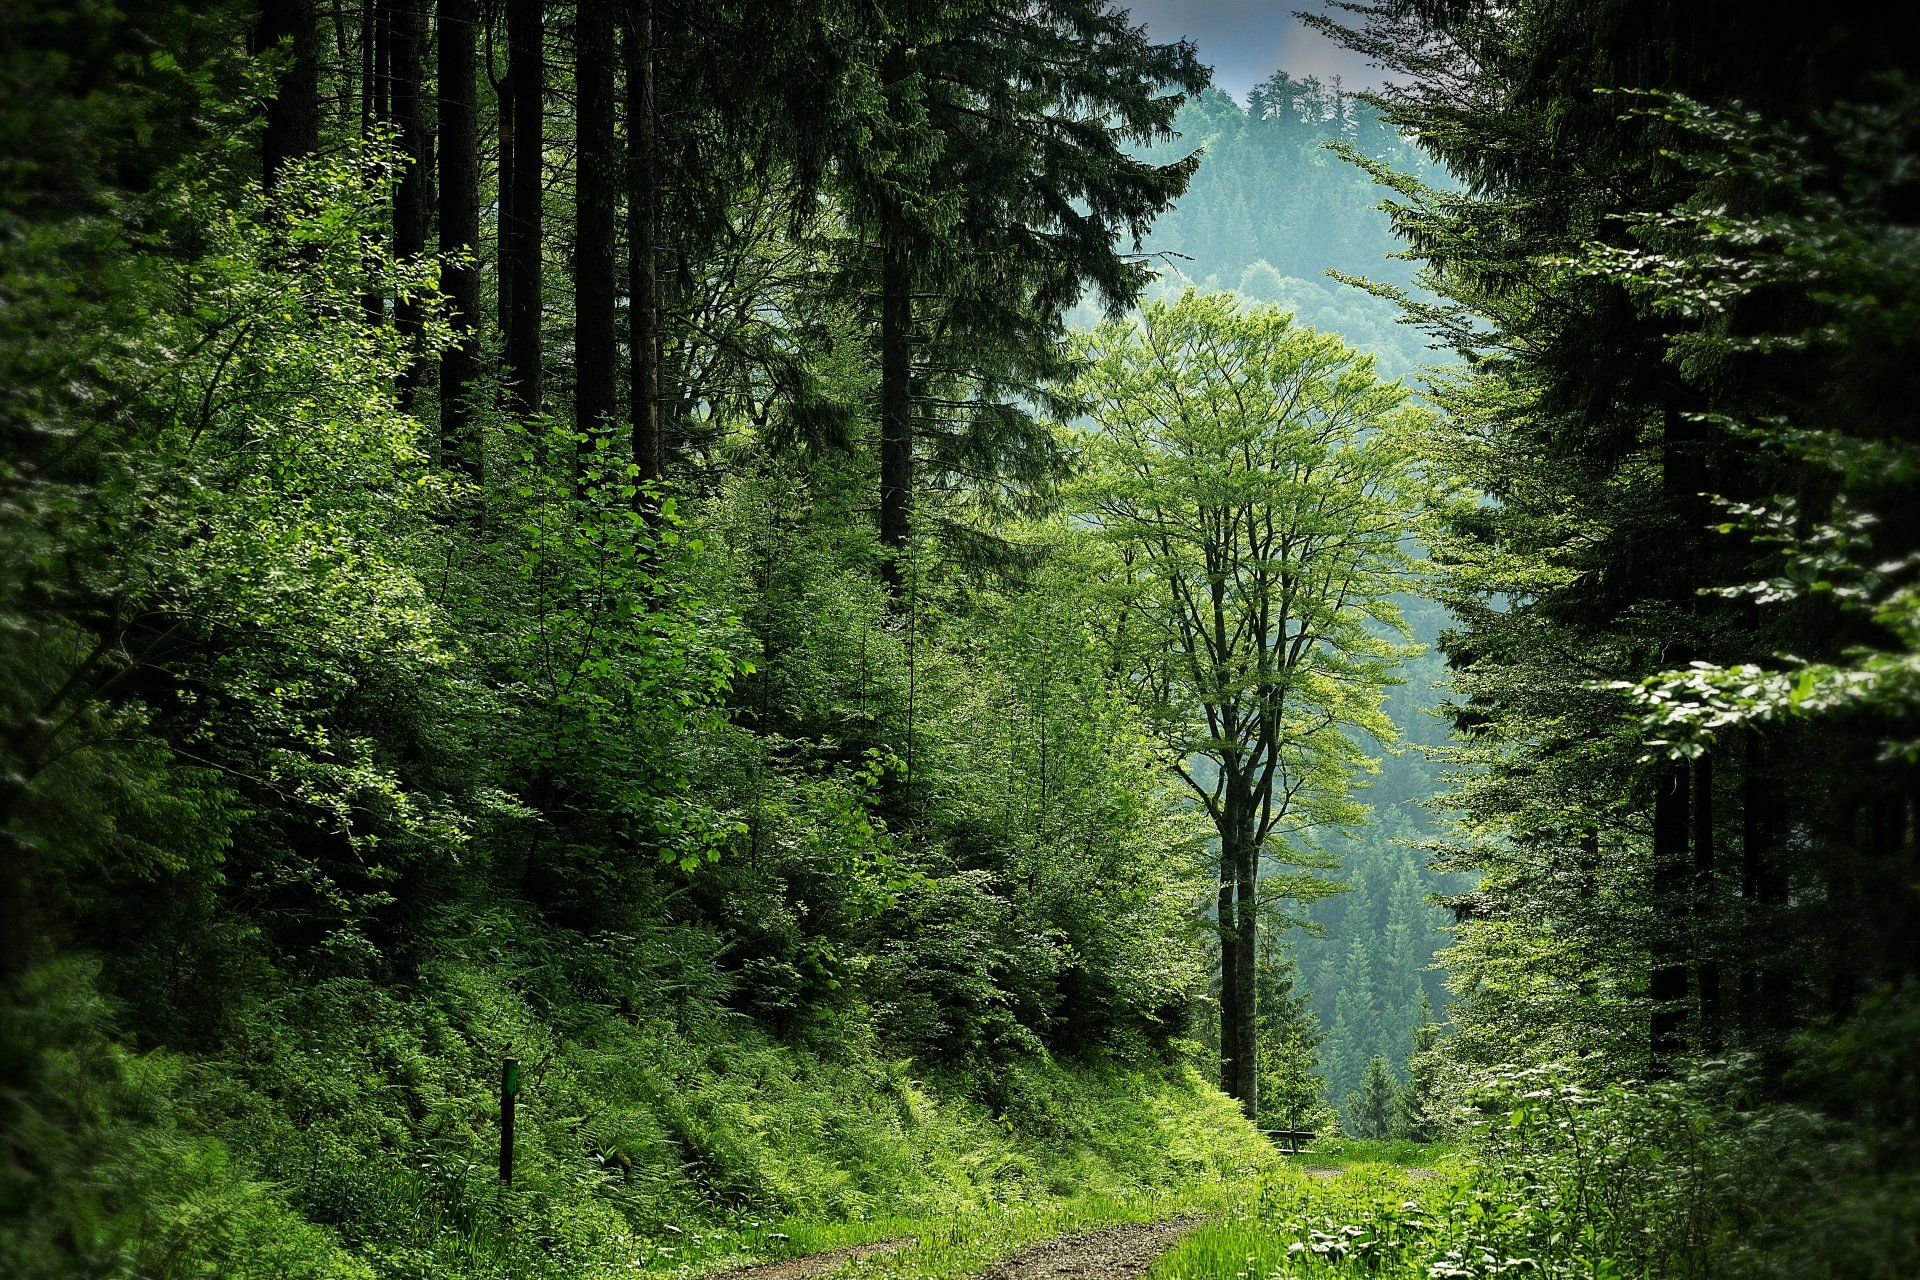 a dirt road going through a lush green forest